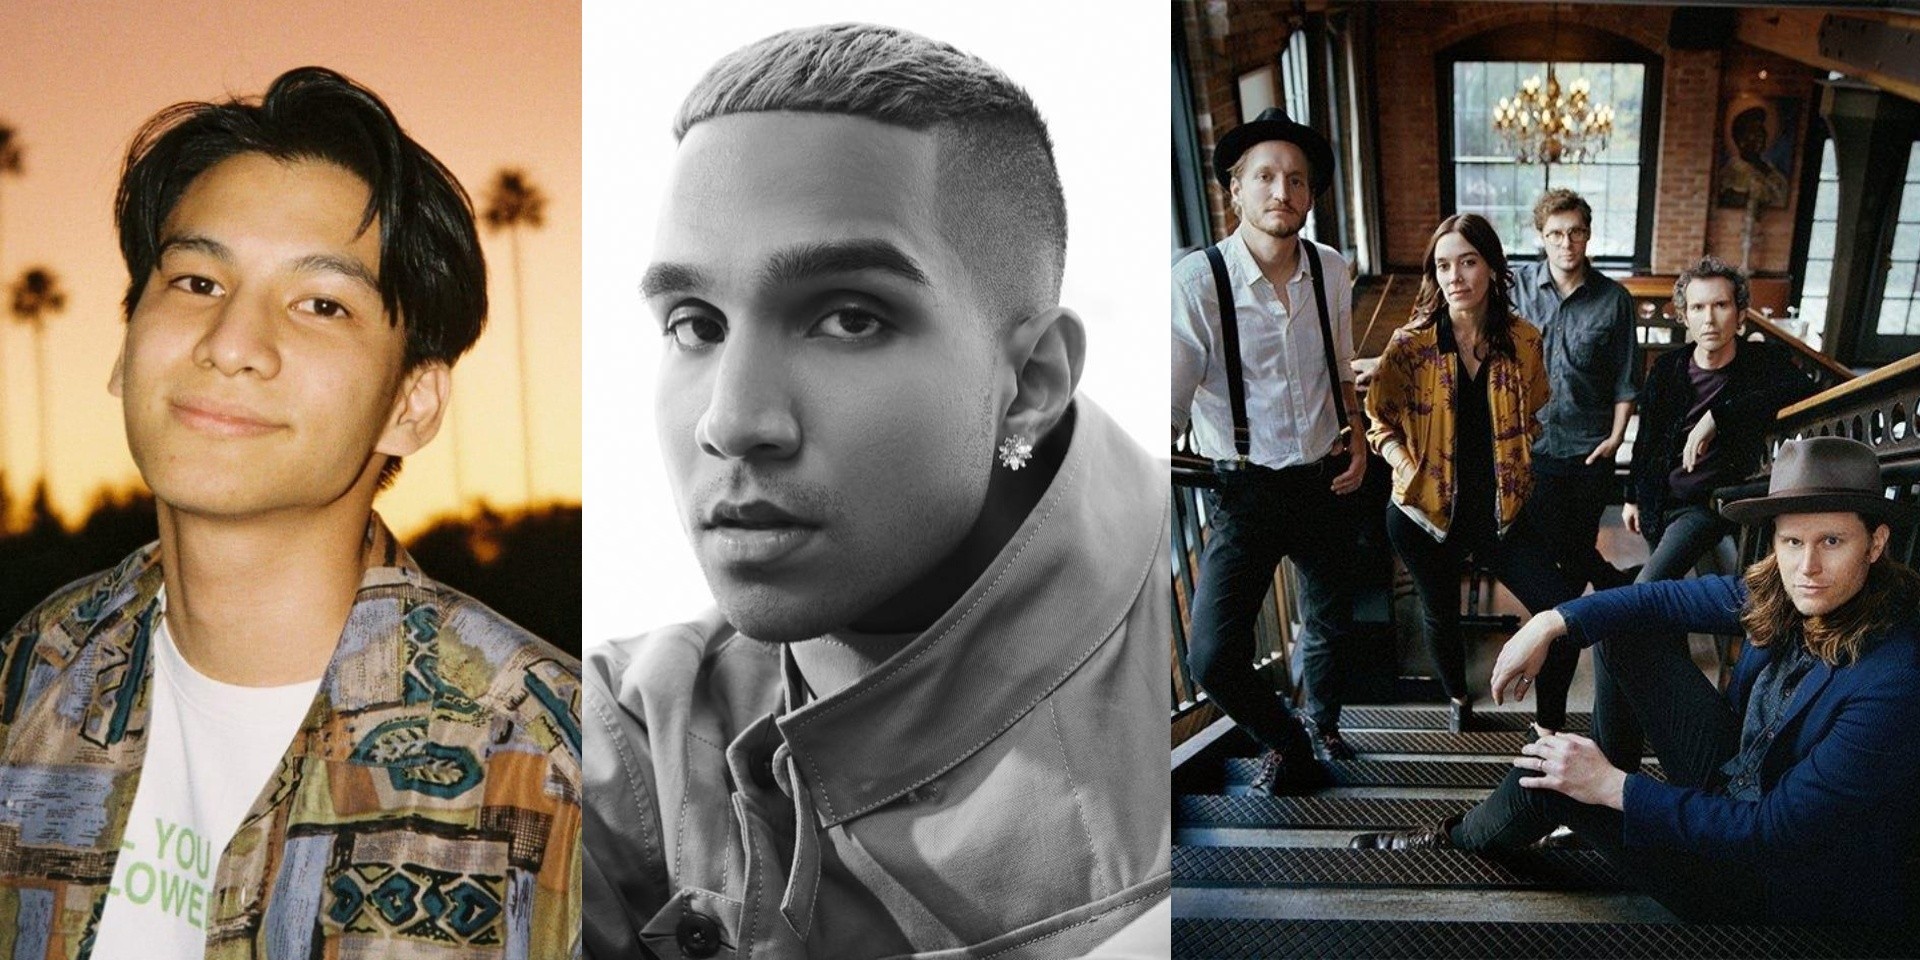 Bacardi NH7 Weekender 2020 lineup revealed – Phum Viphurit, Yung Raja, The Lumineers, and more